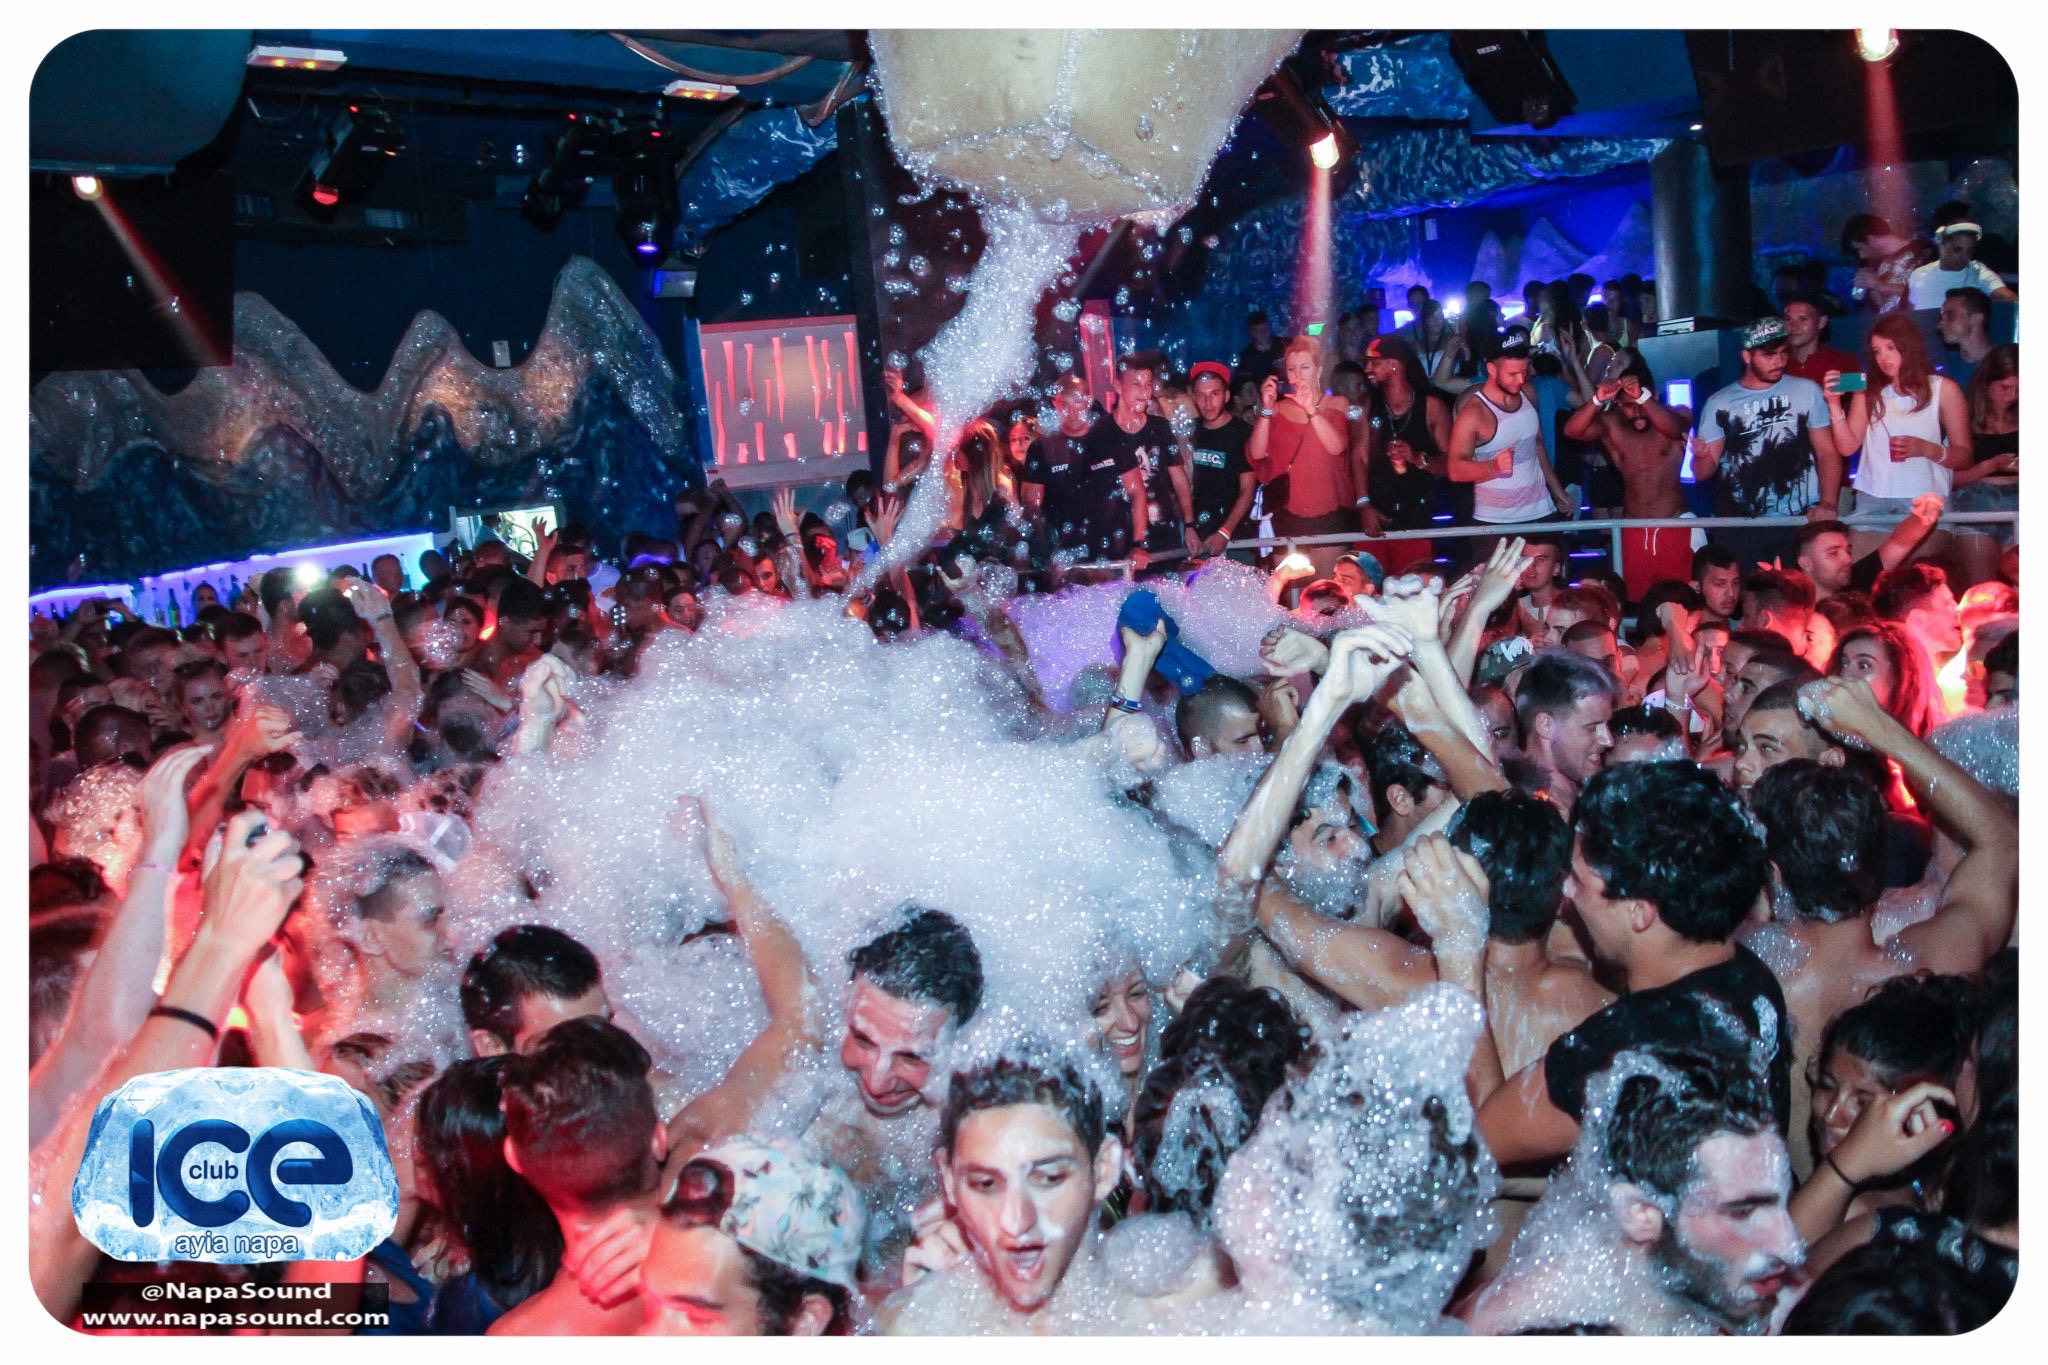 Foam Party Club Ice Ayia Napa Easy Riders Rentals Ayia Napa Cyprus